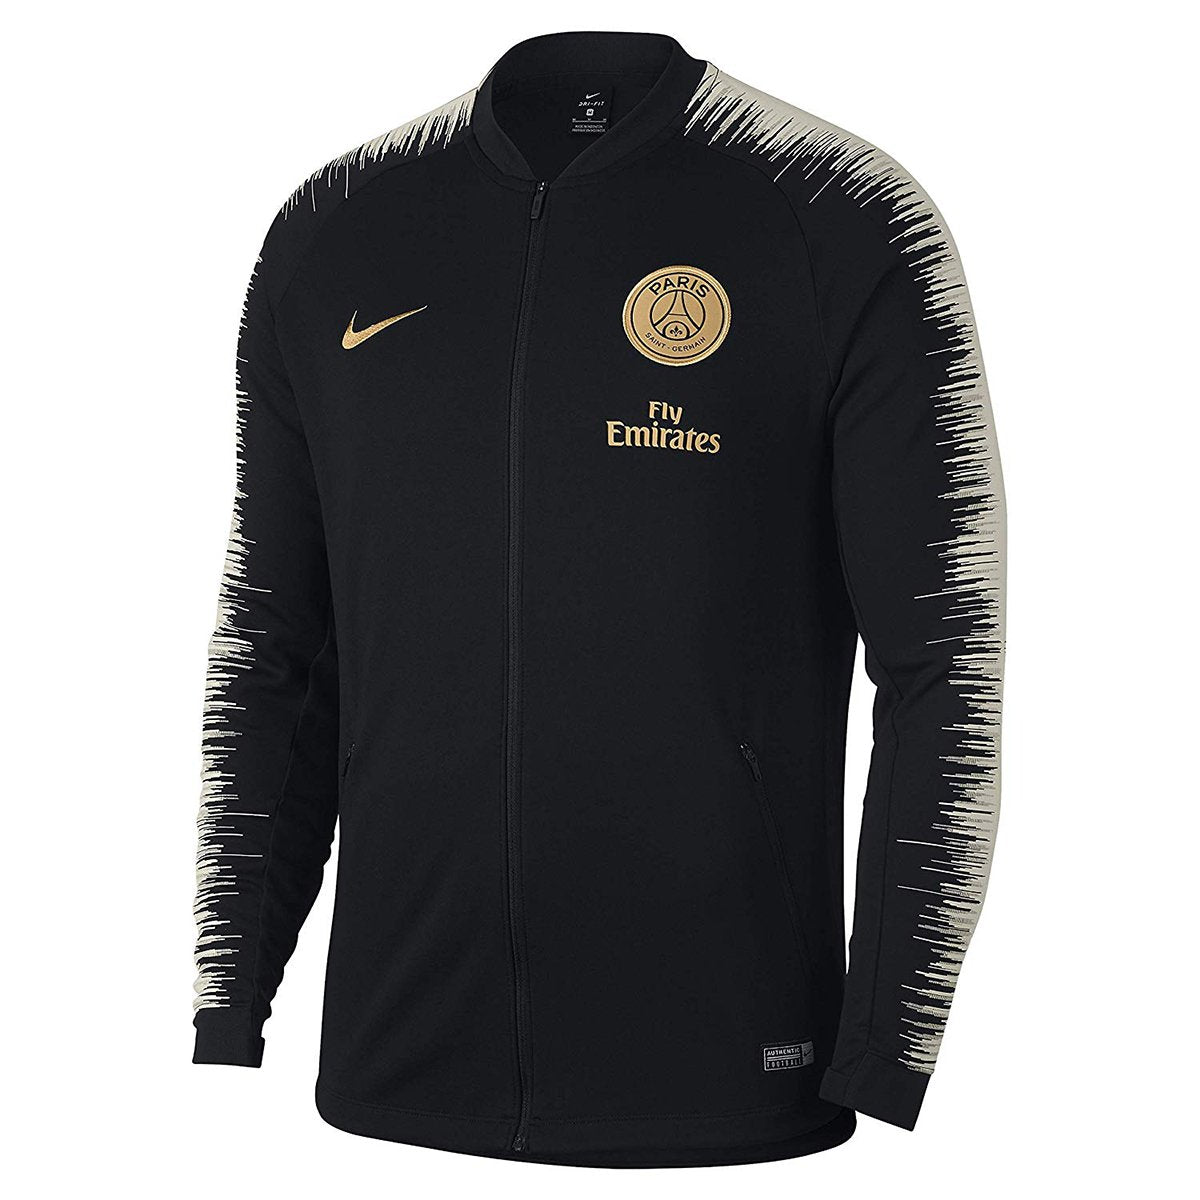 Nike Official 20182019 PSG Paris Saint Germain Anthem Jacket 8943650